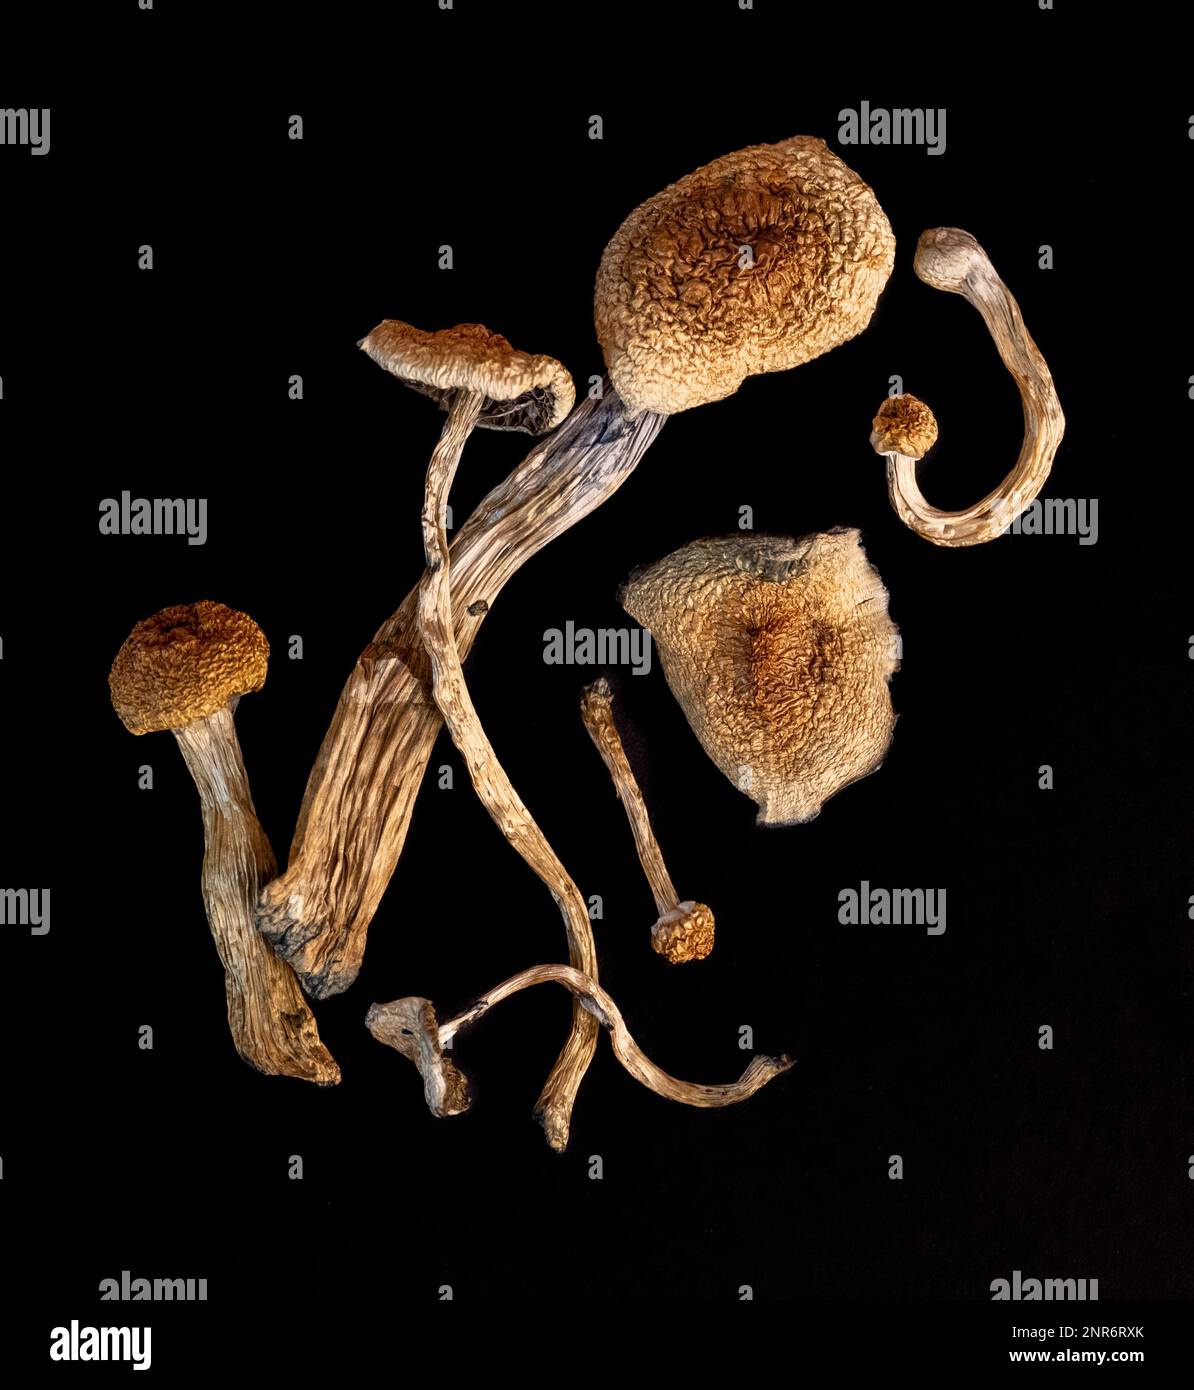 Dried psilocybin mushrooms on black background Stock Photo